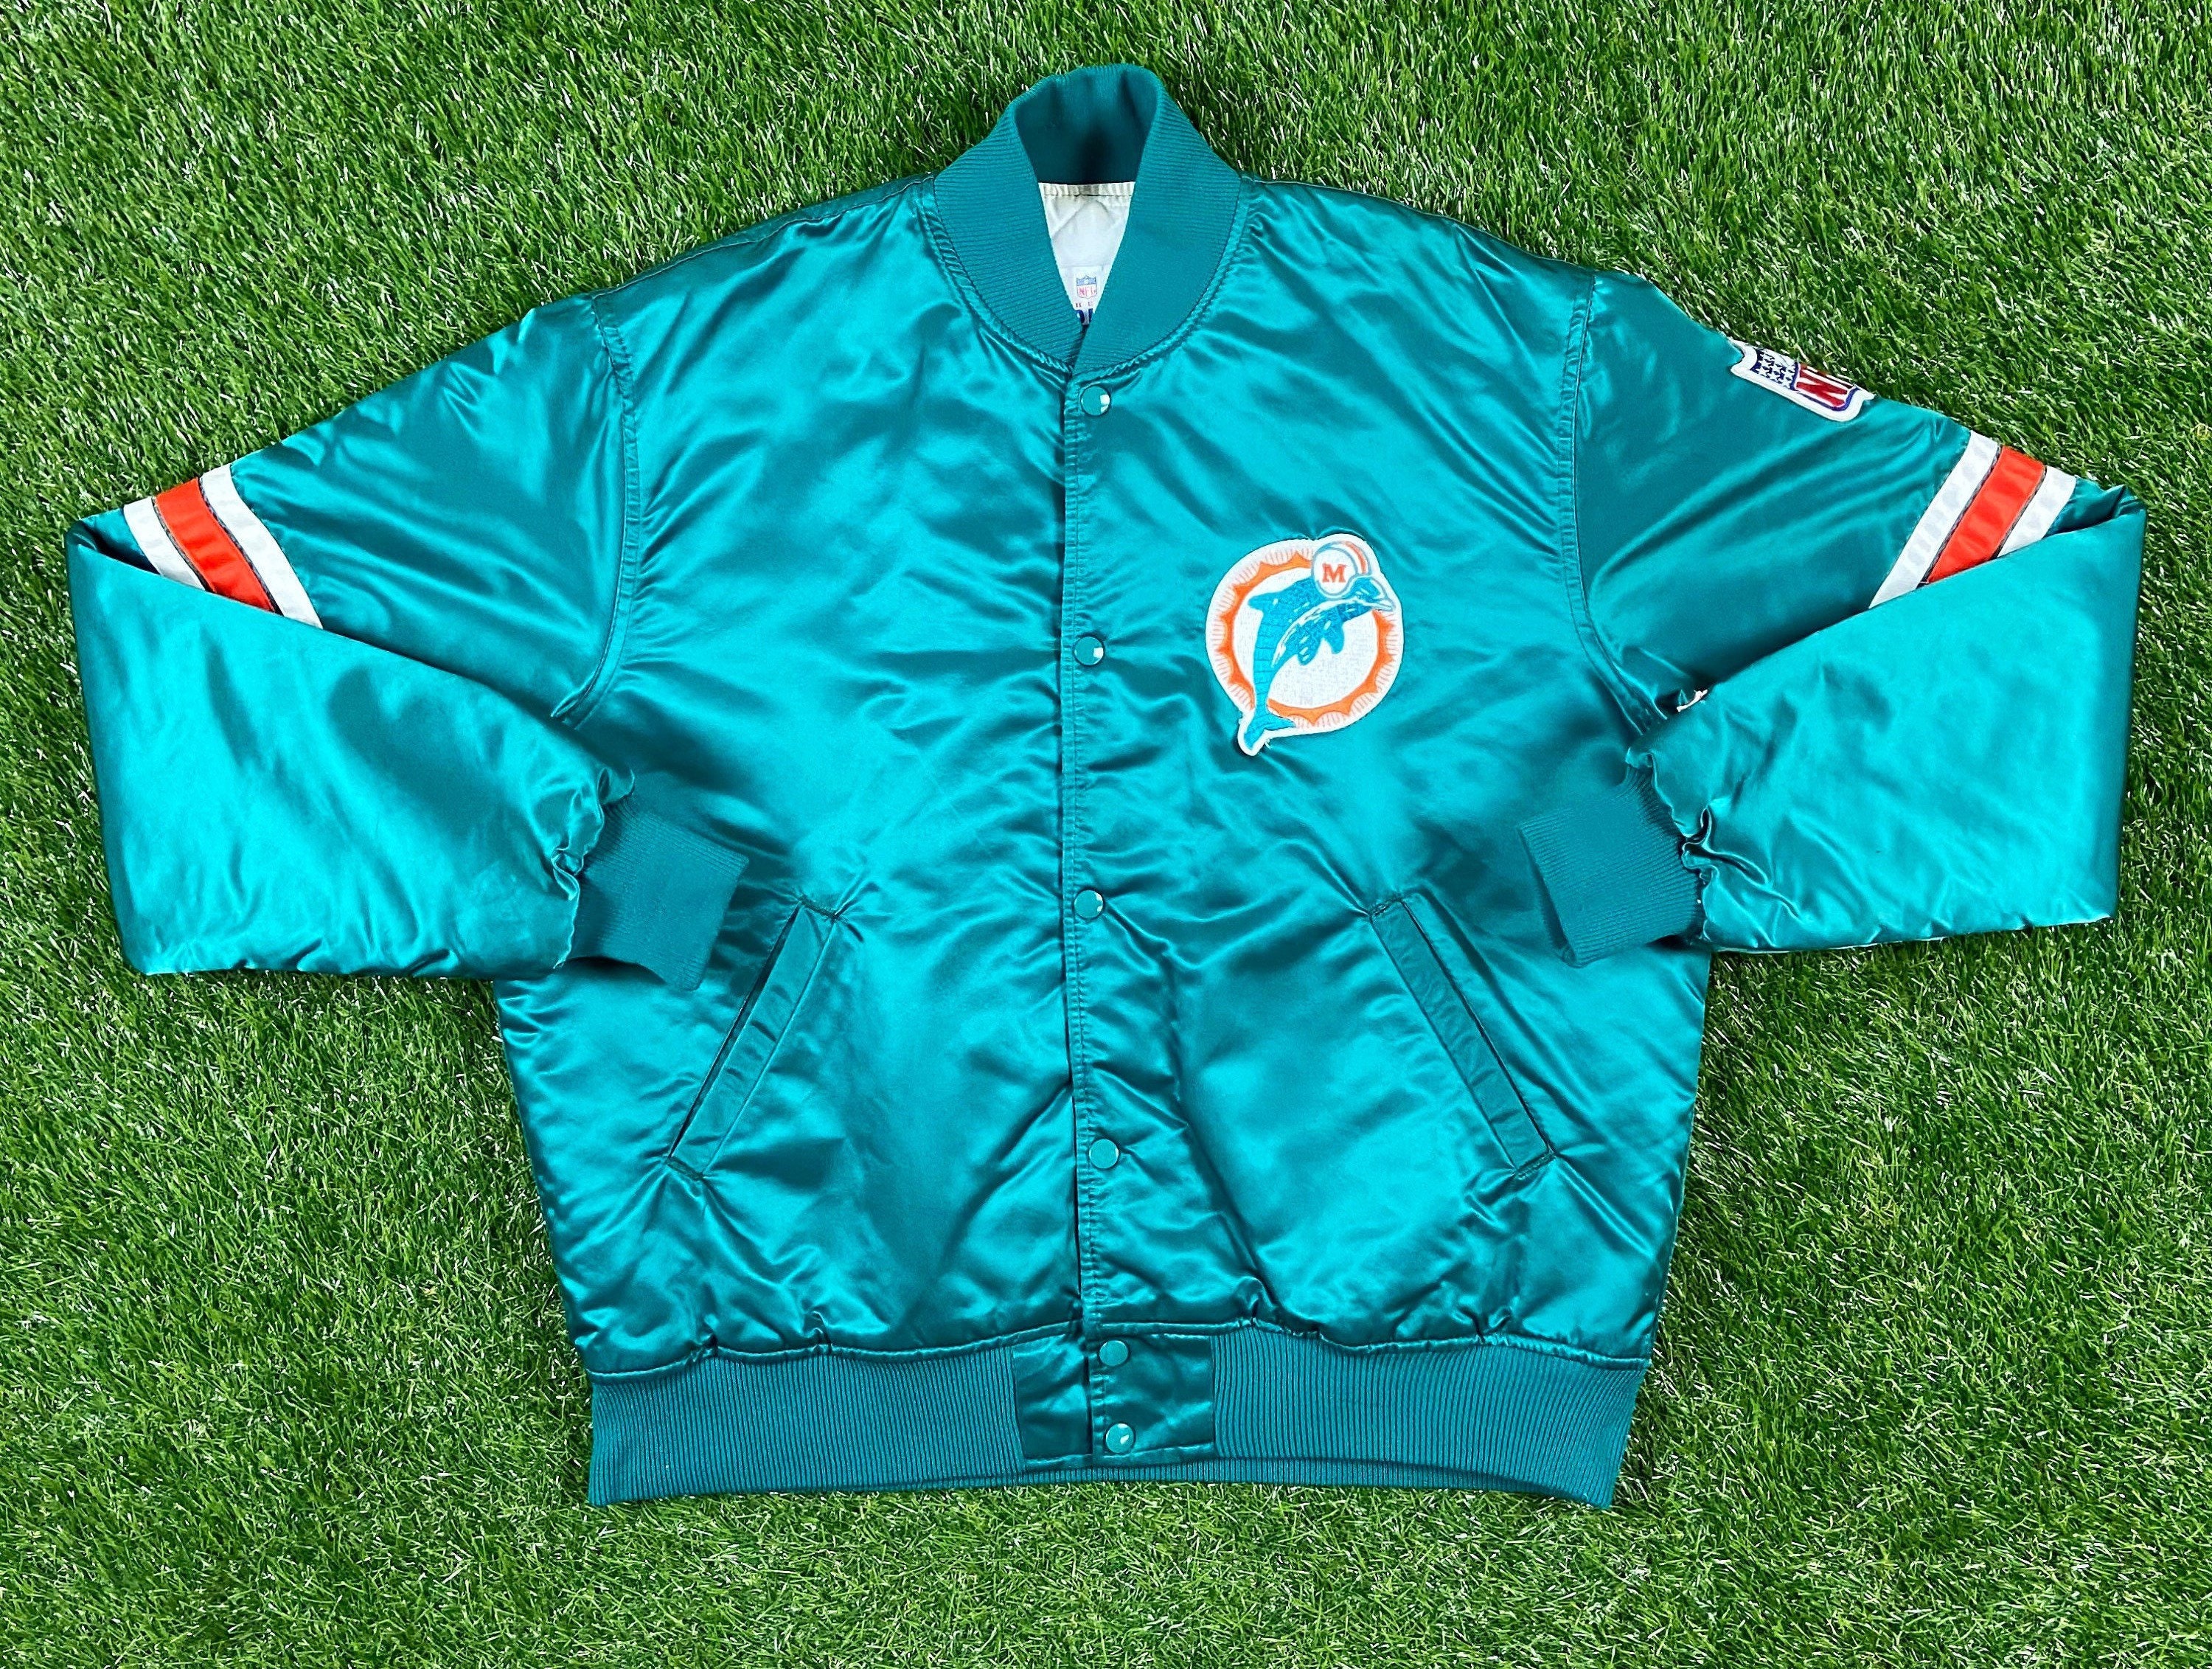 90s dolphins starter jacket